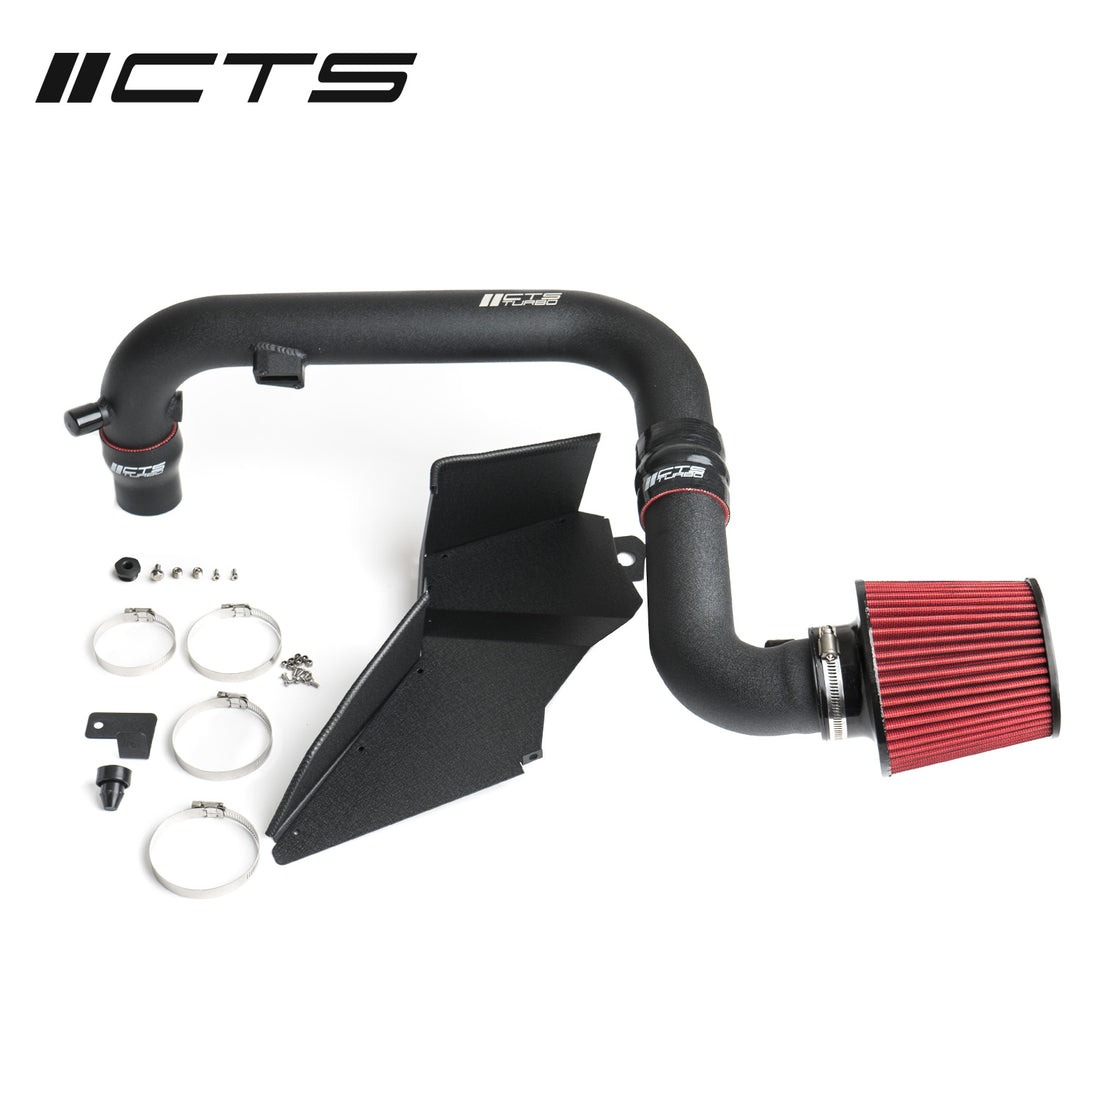 CTS TURBO AIR INTAKE SYSTEM FOR 2.0T FSI (EA113) - MK5 GTI/GLI; MK6 Golf R; Audi A3 CTS Turbo IT-105R